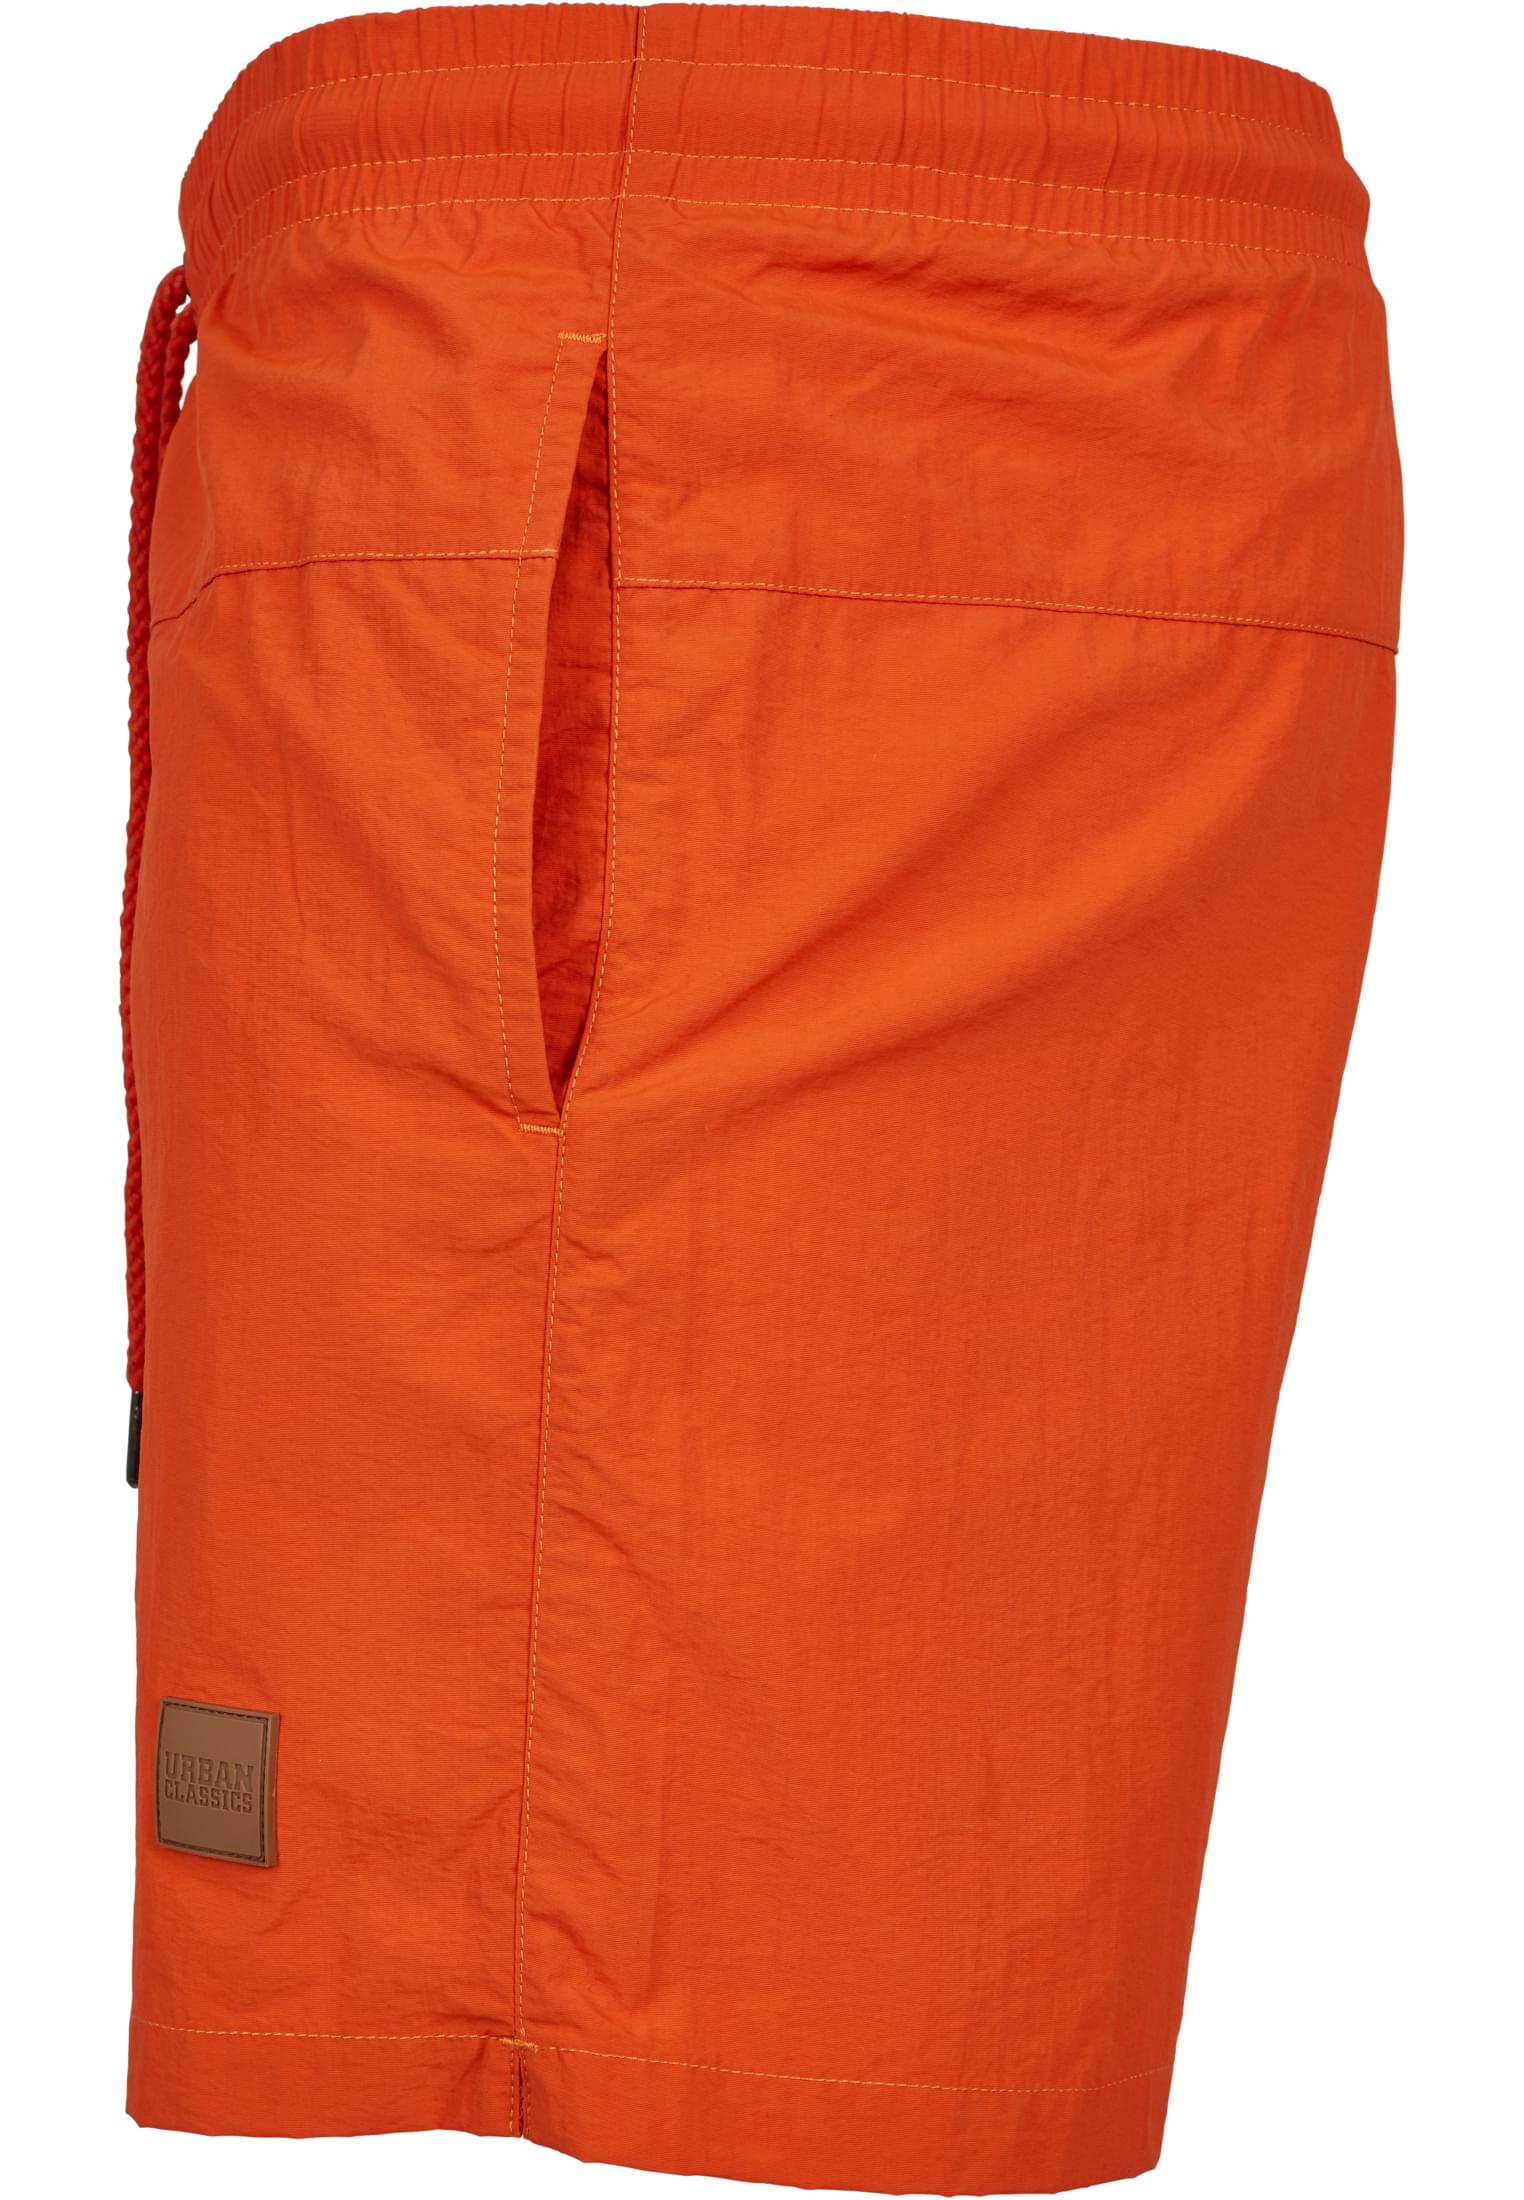 Plus Size Block Swim Shorts in Farbe rust orange